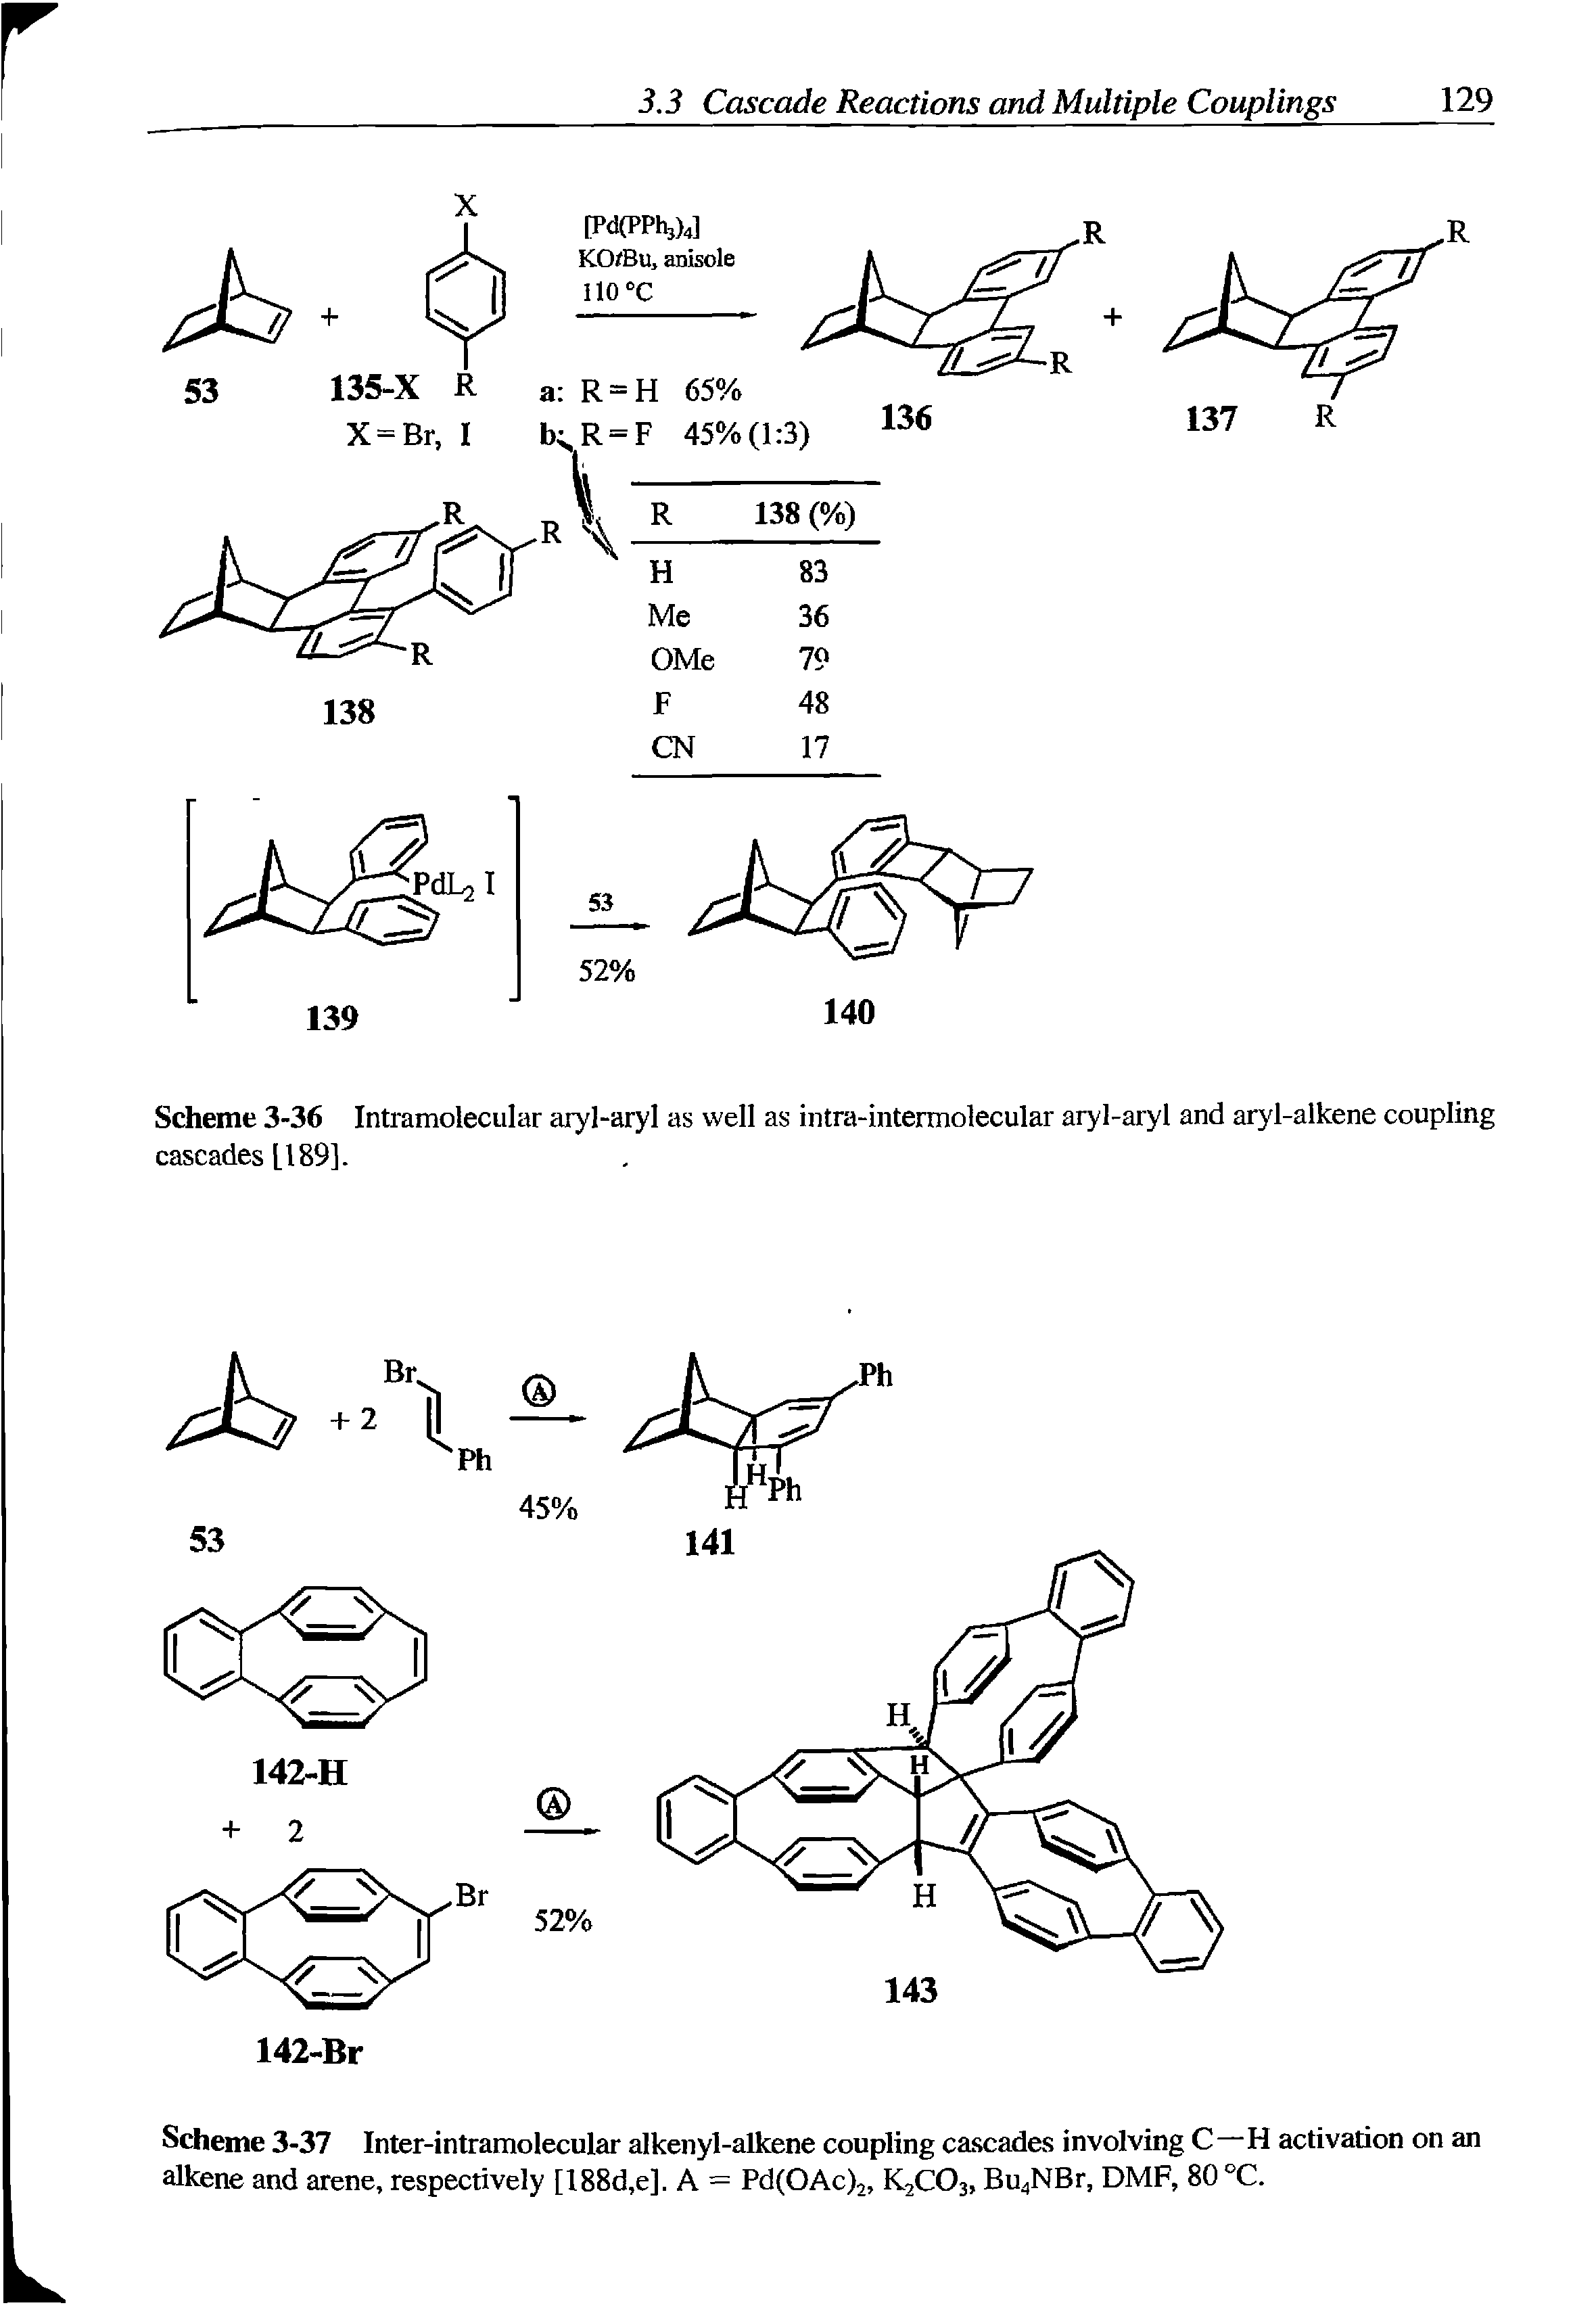 Scheme 3-37 Inter-intramolecular alkenyl-alkene coupling cascades involving C H activation on an alkene and arene, respectively [188d,e]. A = Pd(OAc), K2CO3, Bu NBr, DMF, 80 °C.